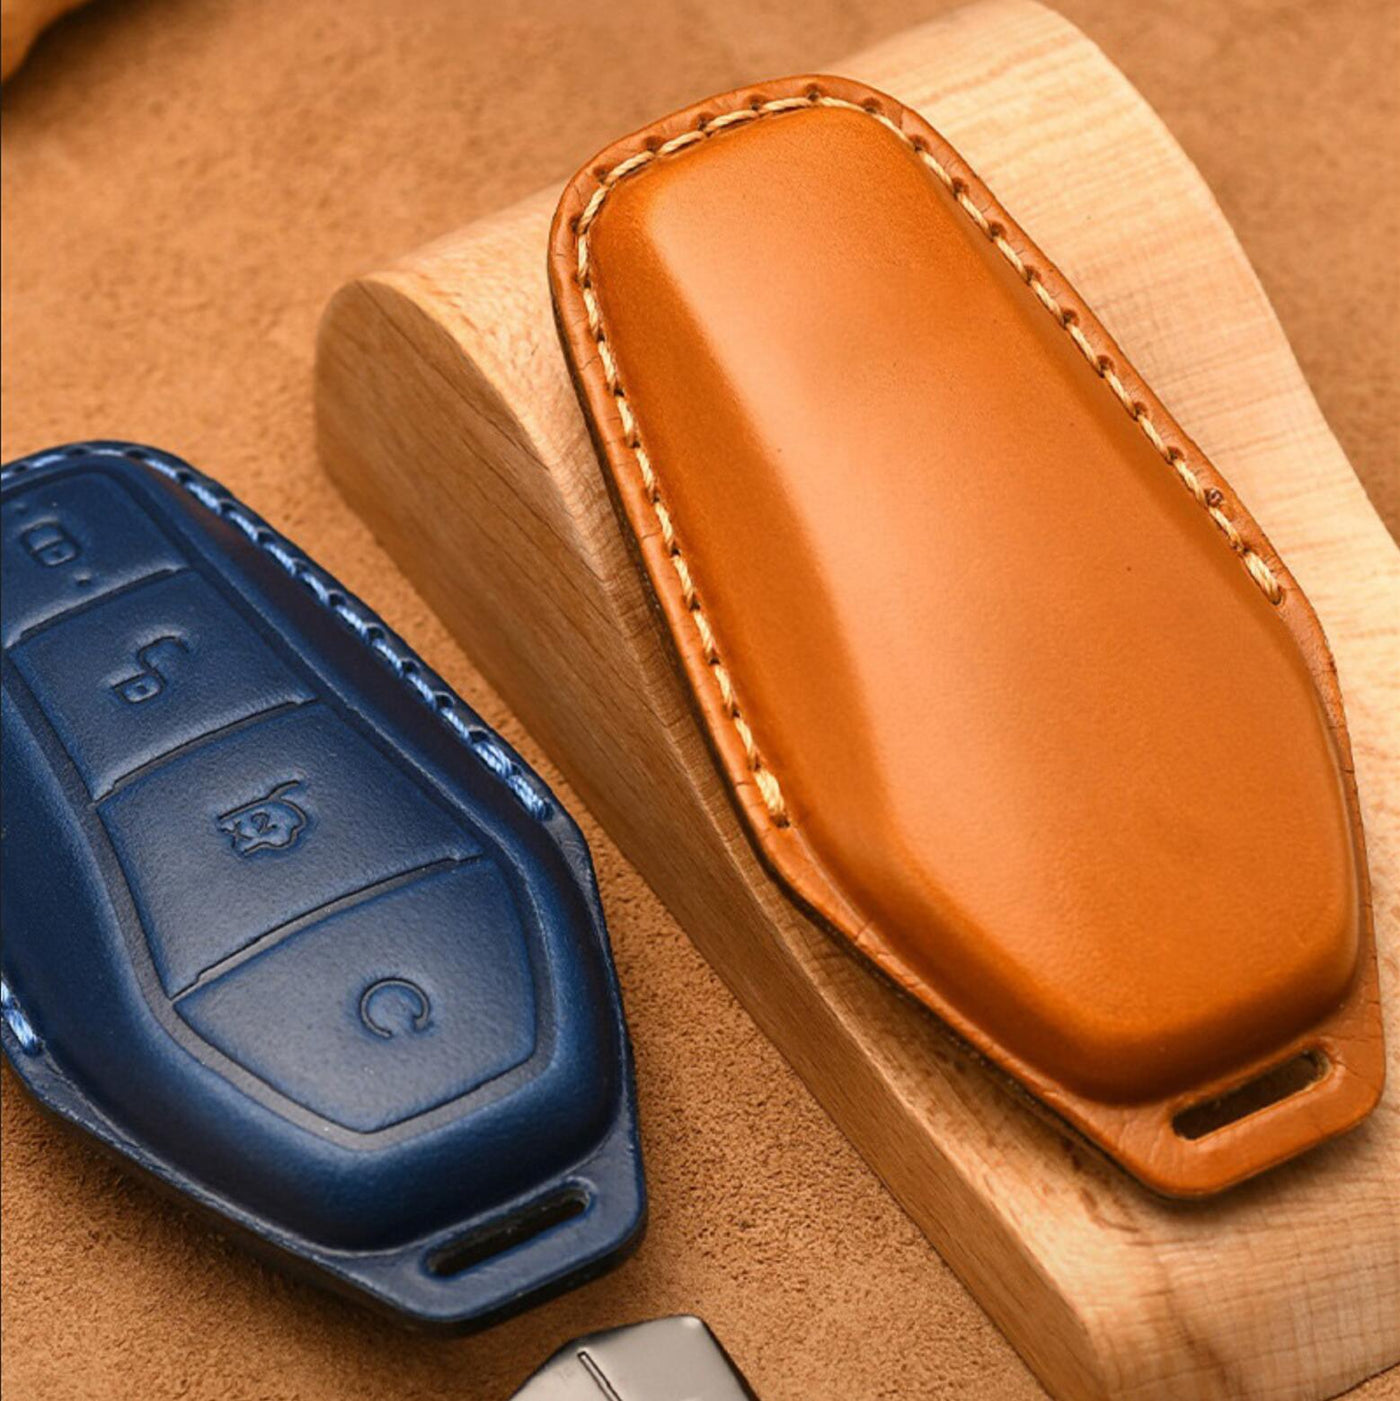 Kaufe Soft TPU Car Key Case Shell Fob Holder Car Key Cover For BYD Han Ev  Tang Dm / Qin PLUS / Song Pro / MAX / Yuan Accessories